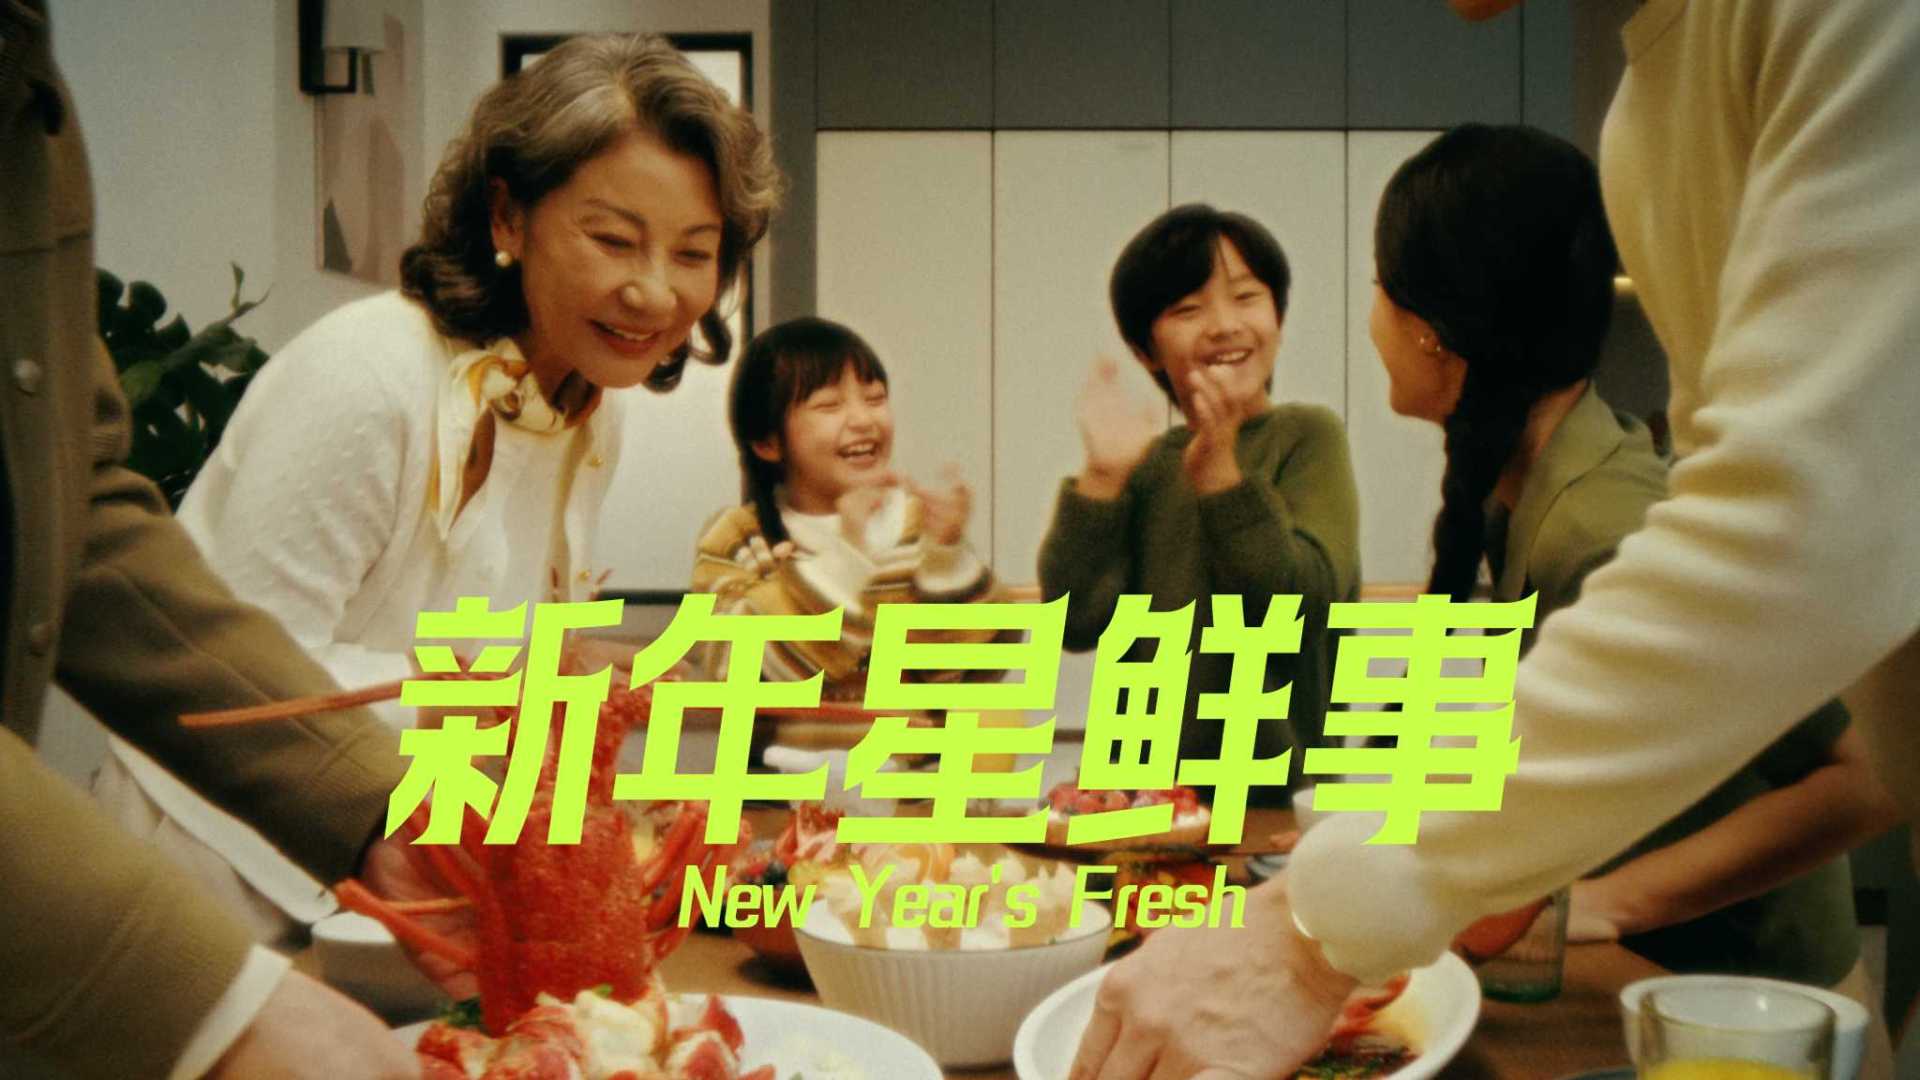 TOSHIBA 冰箱｜新年「星」鲜事 Dir cut